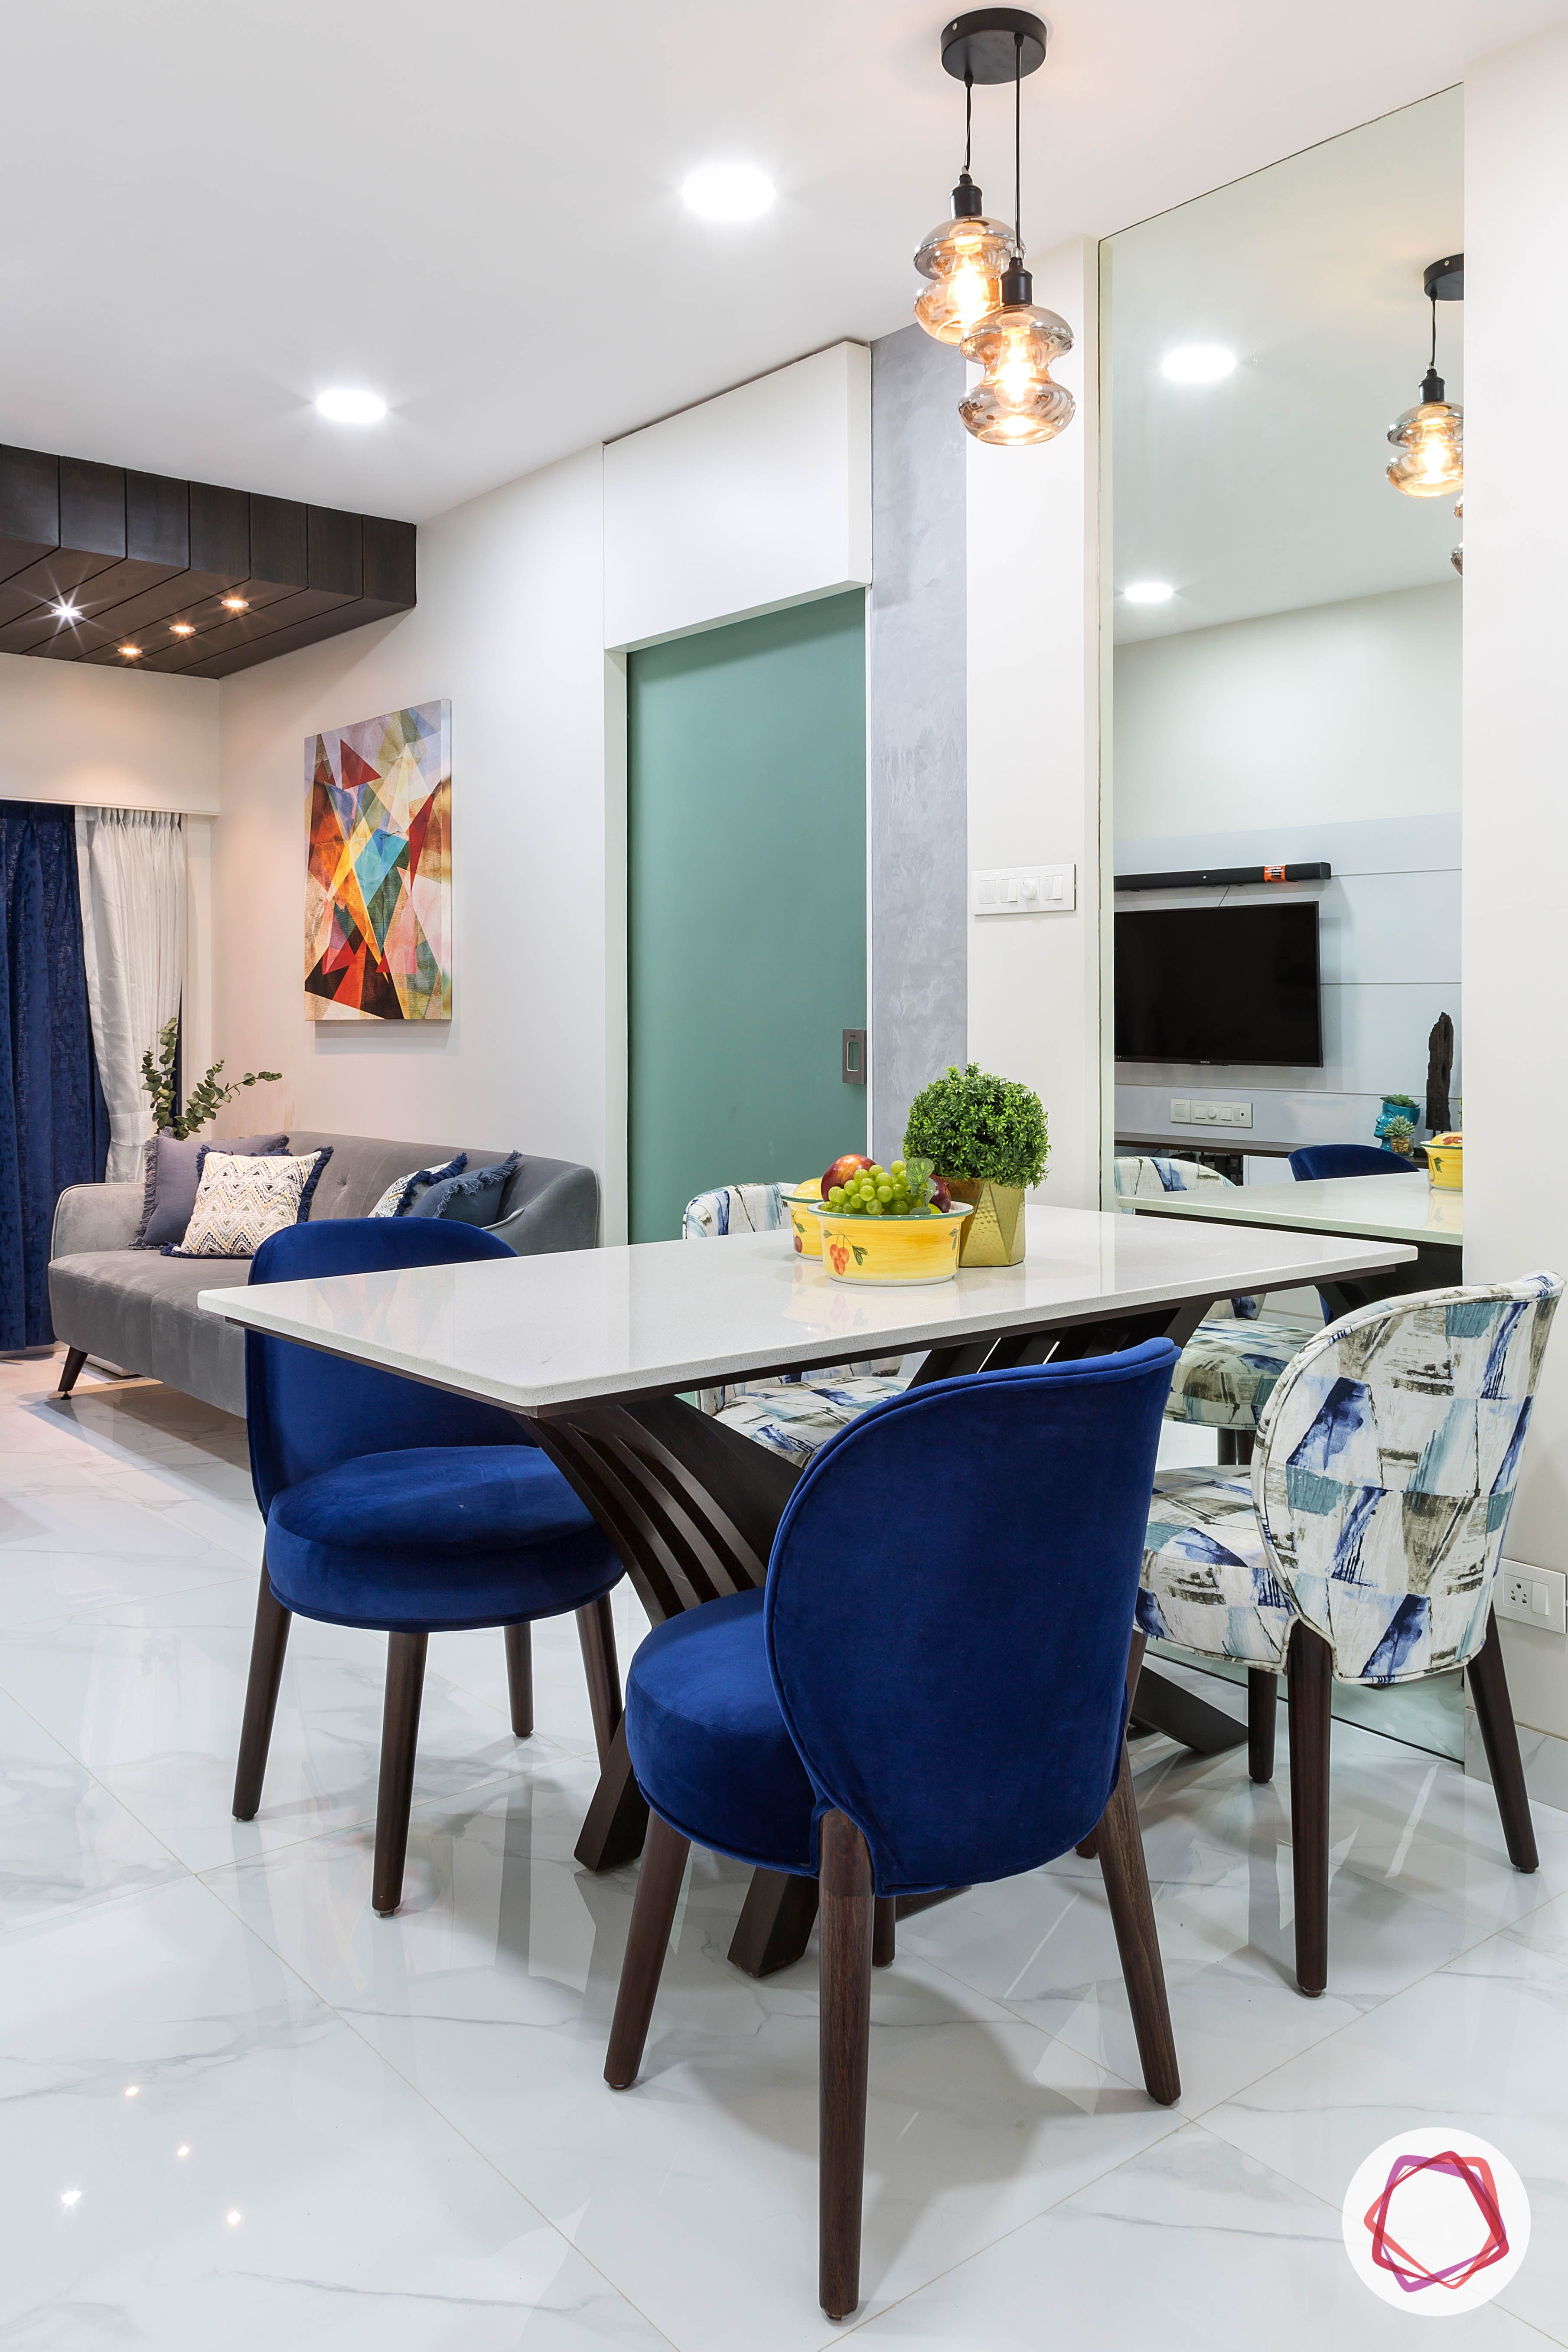 house-renovation-dining-room-stylish-kalinga-top-upholstered-chairs-pendant-lights
